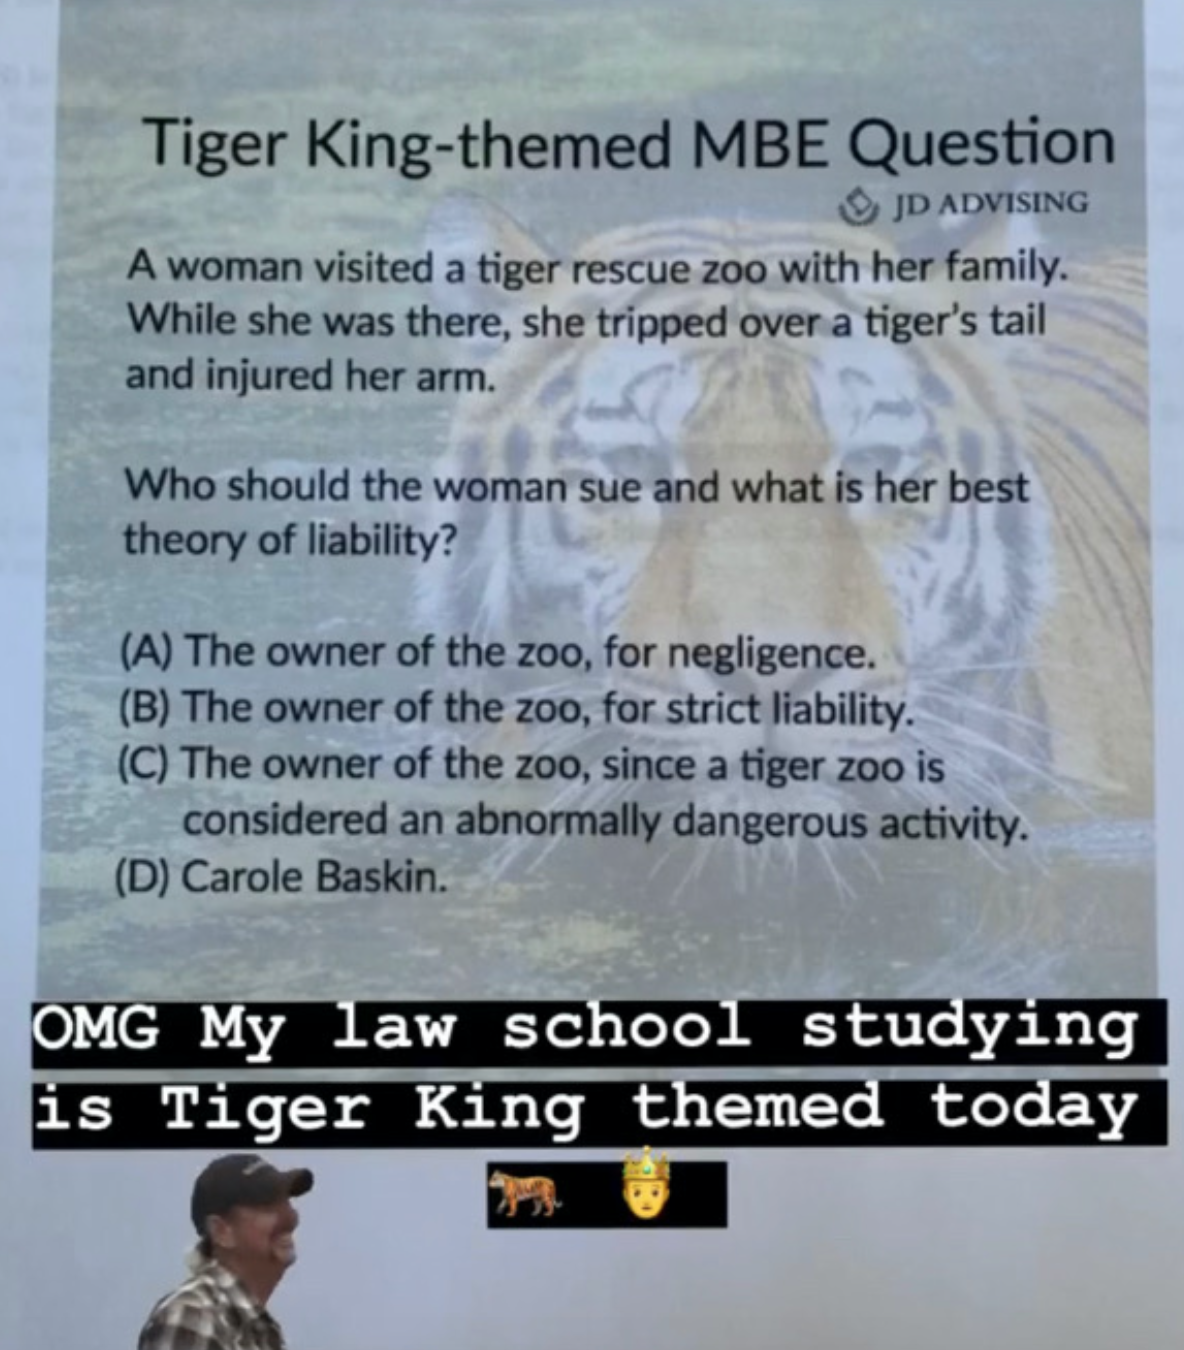 kim kardashian jd advising tiger king themed MBE question